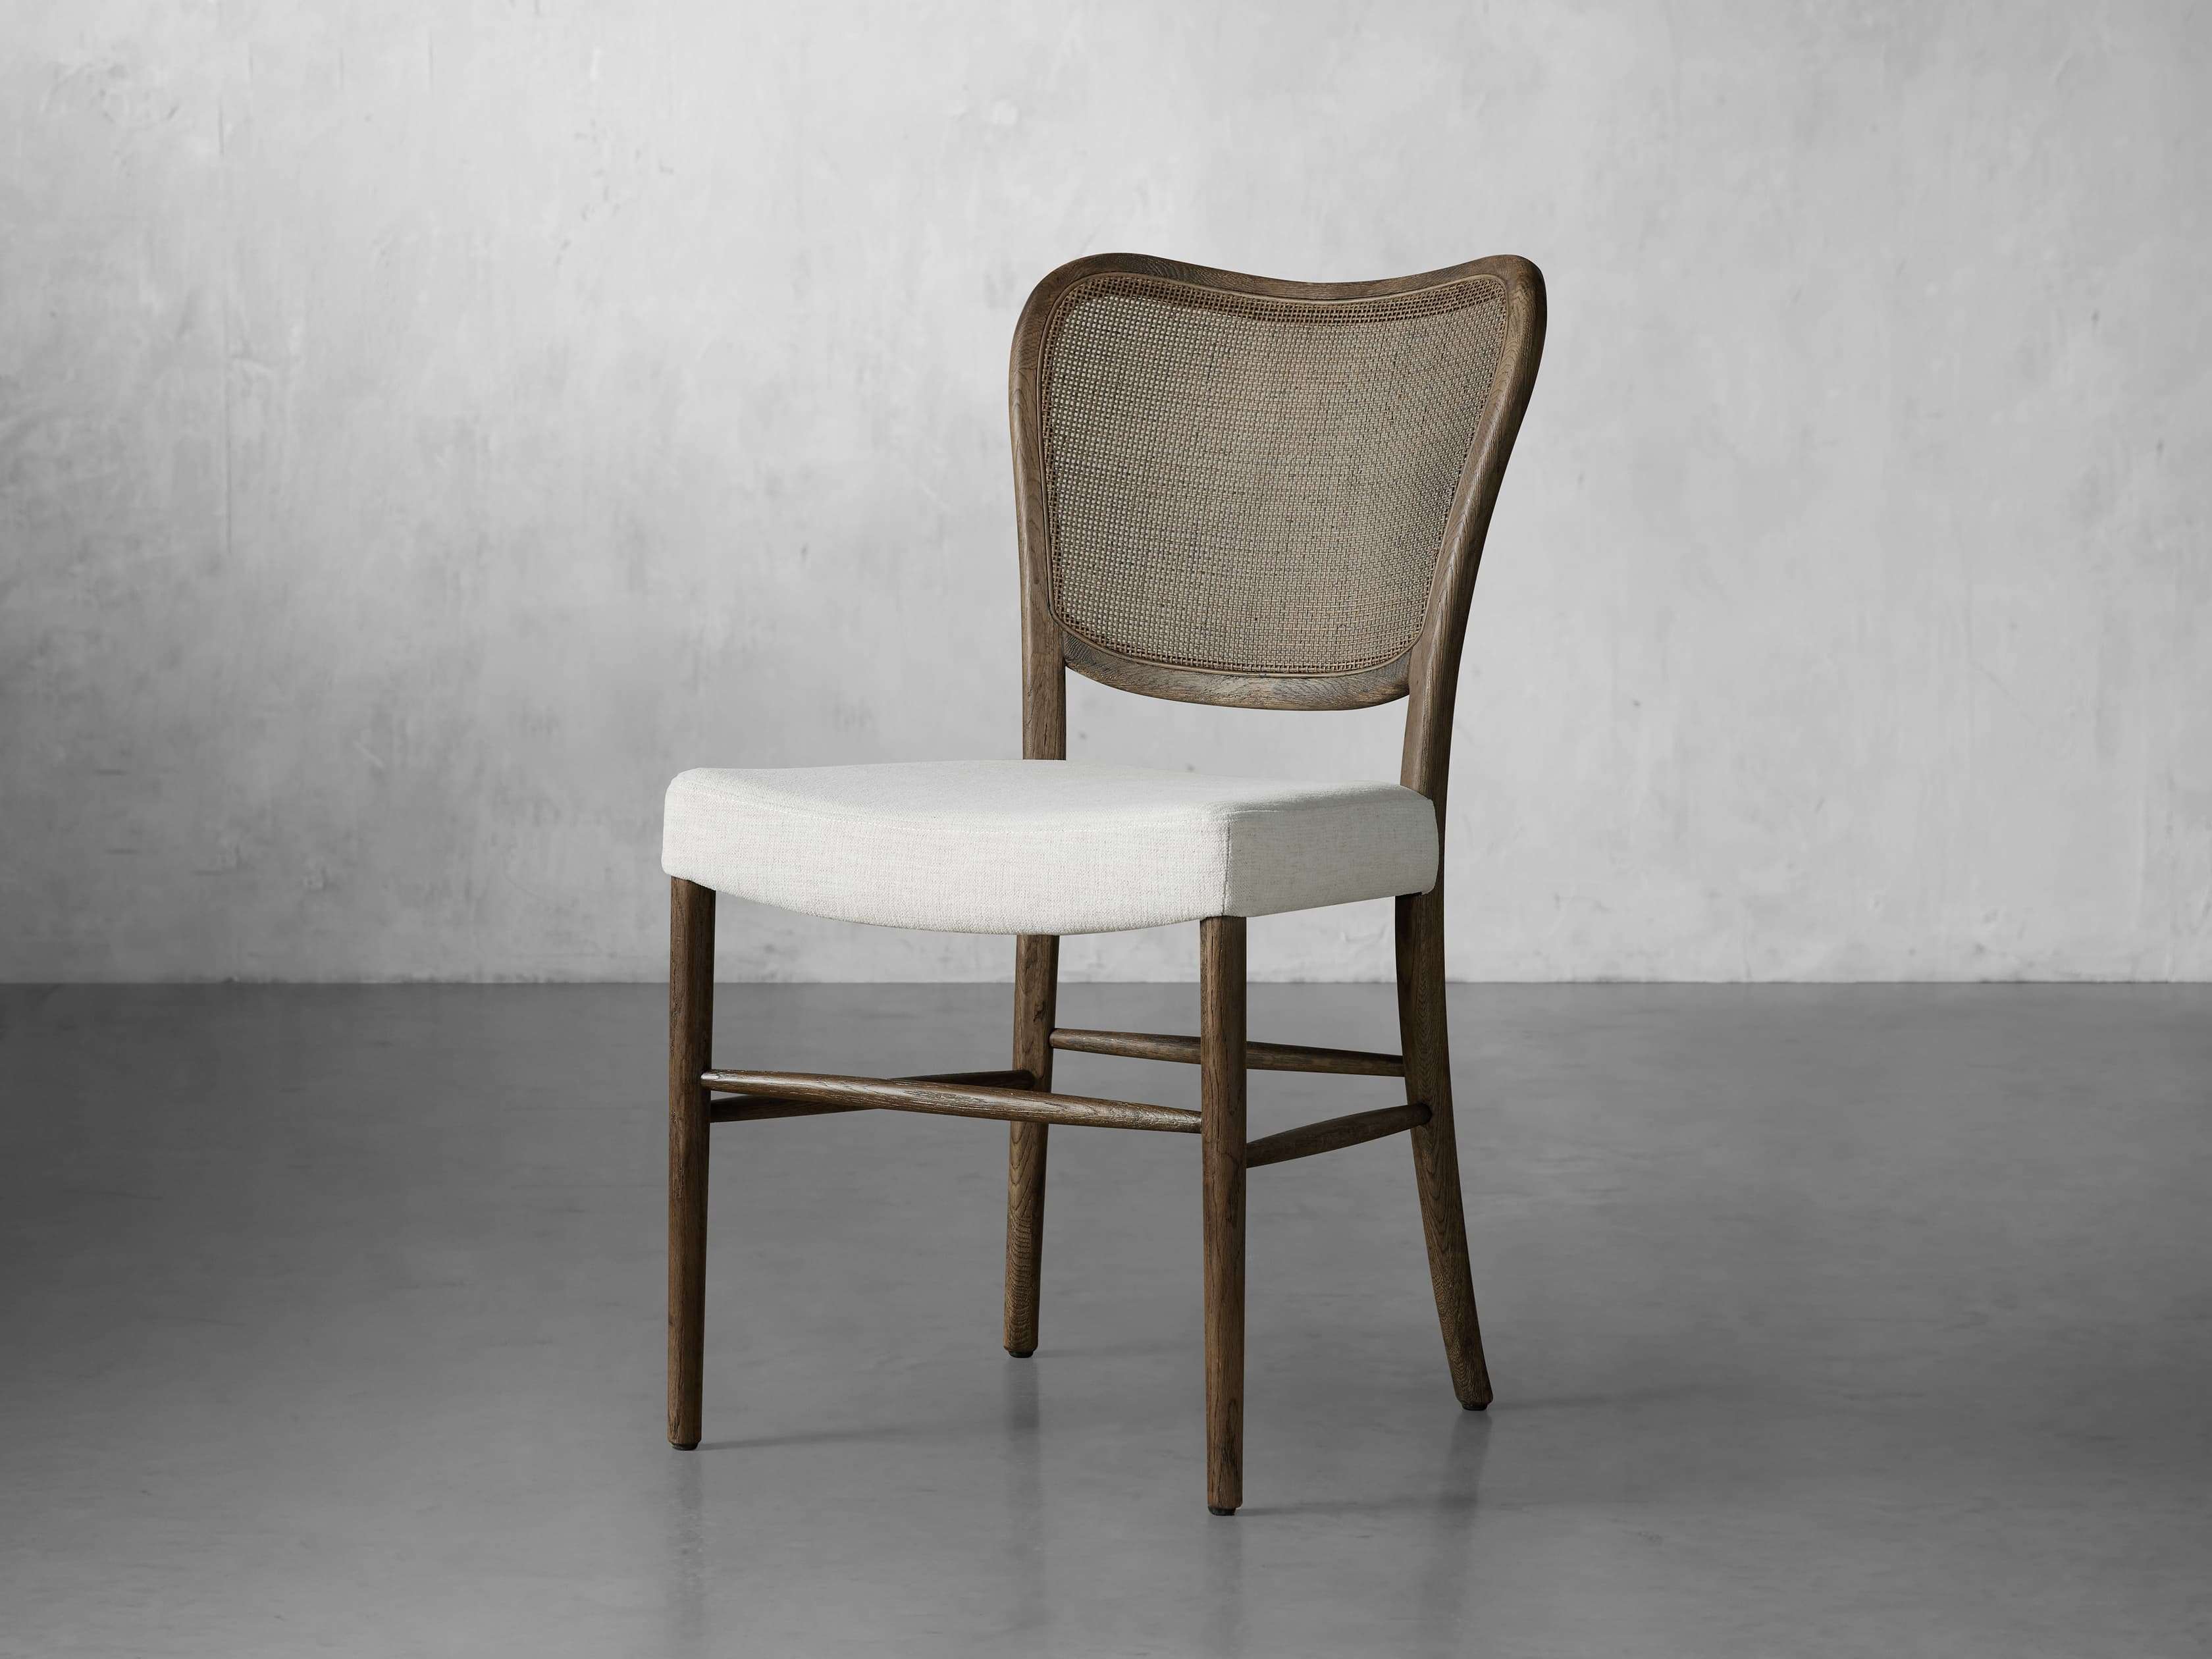 Margot Cane Back Dining Chair in Cinder Wood Natural | Arhaus